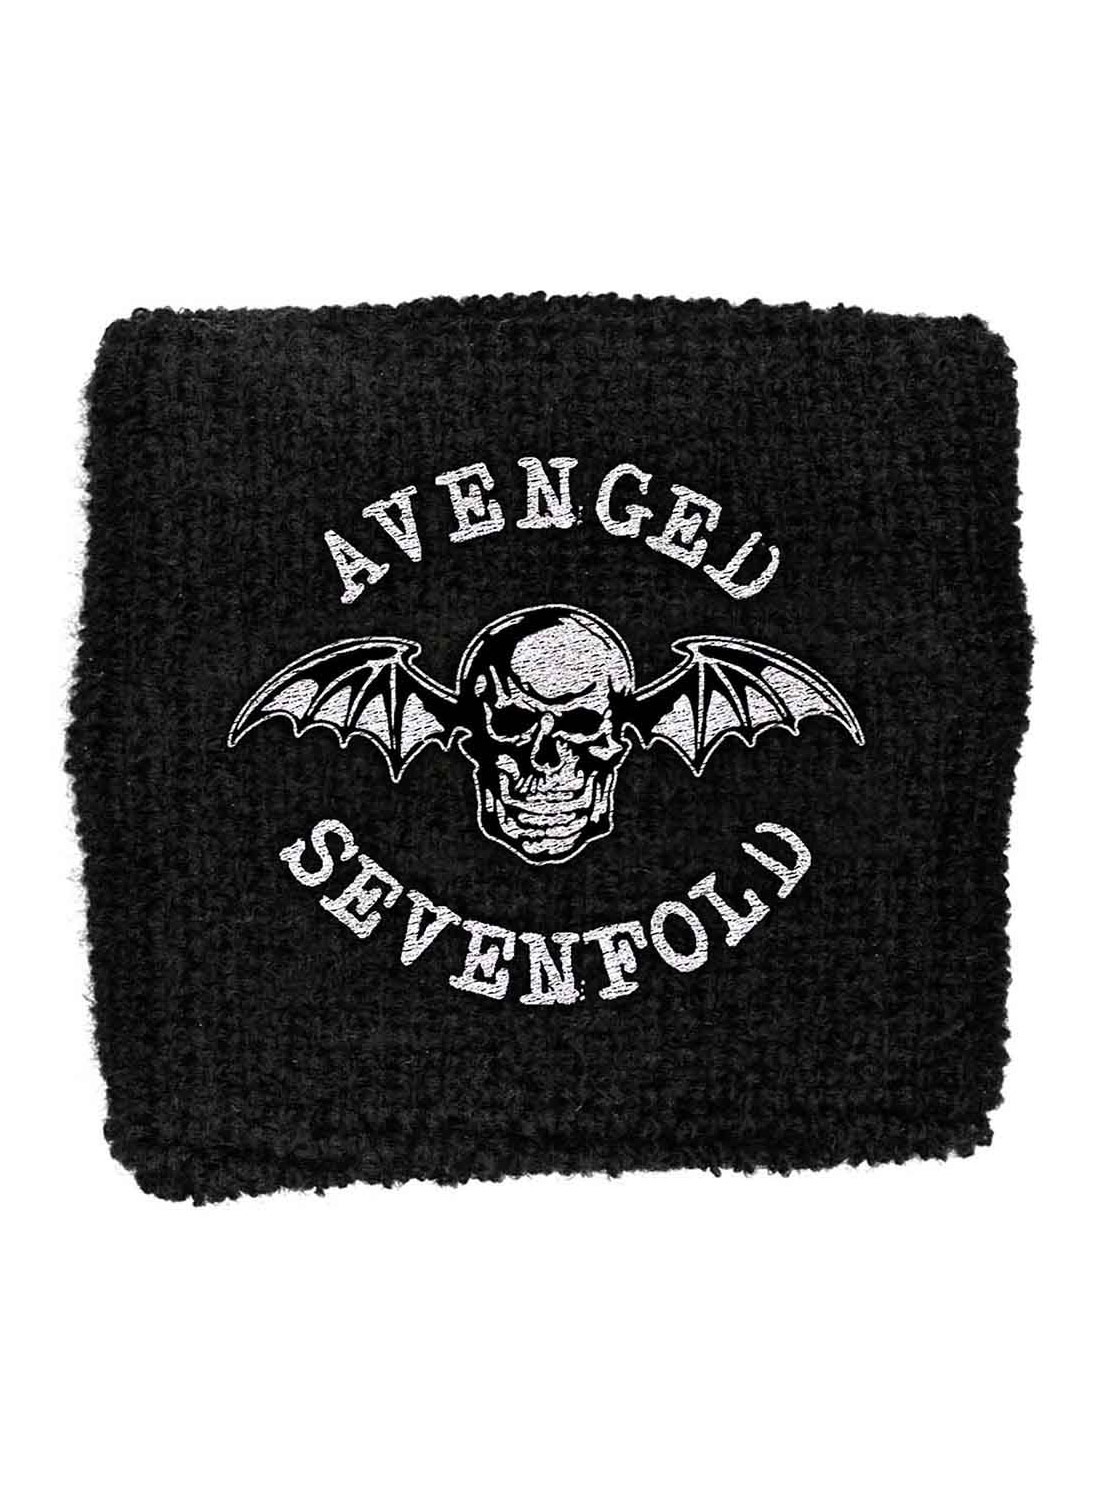 Avenged Sevenfold Embroidered Sweatband